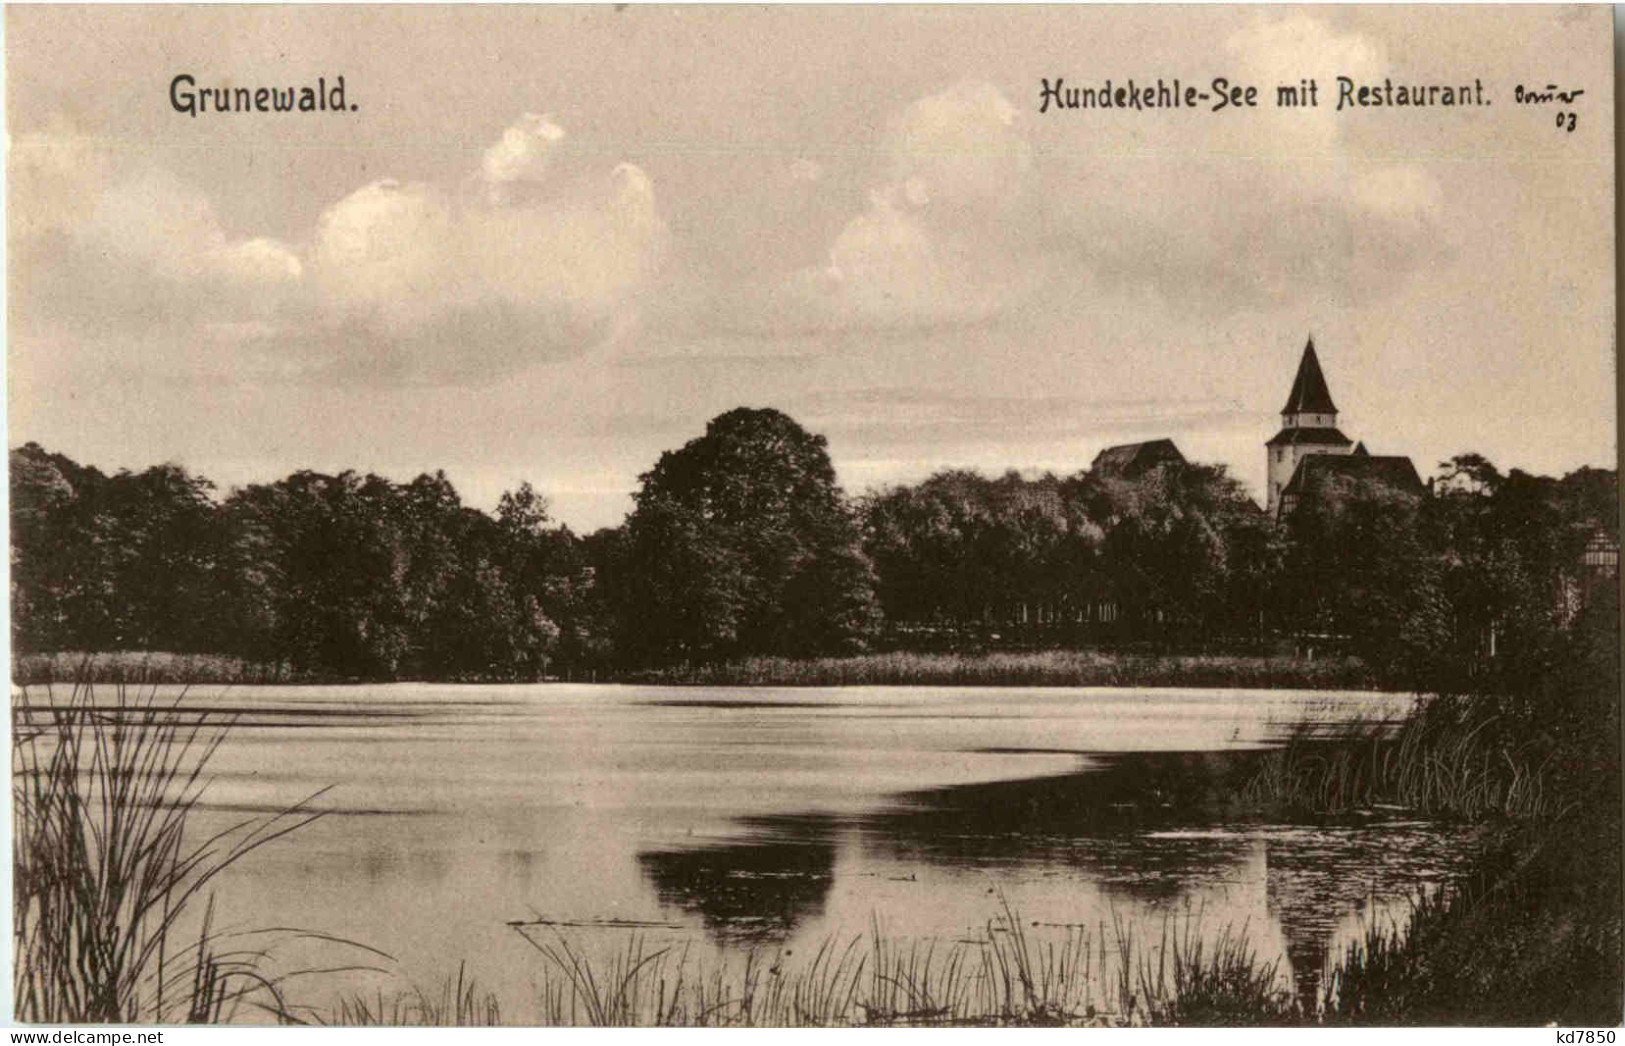 Grunewald - Hendekehle-See - Grunewald